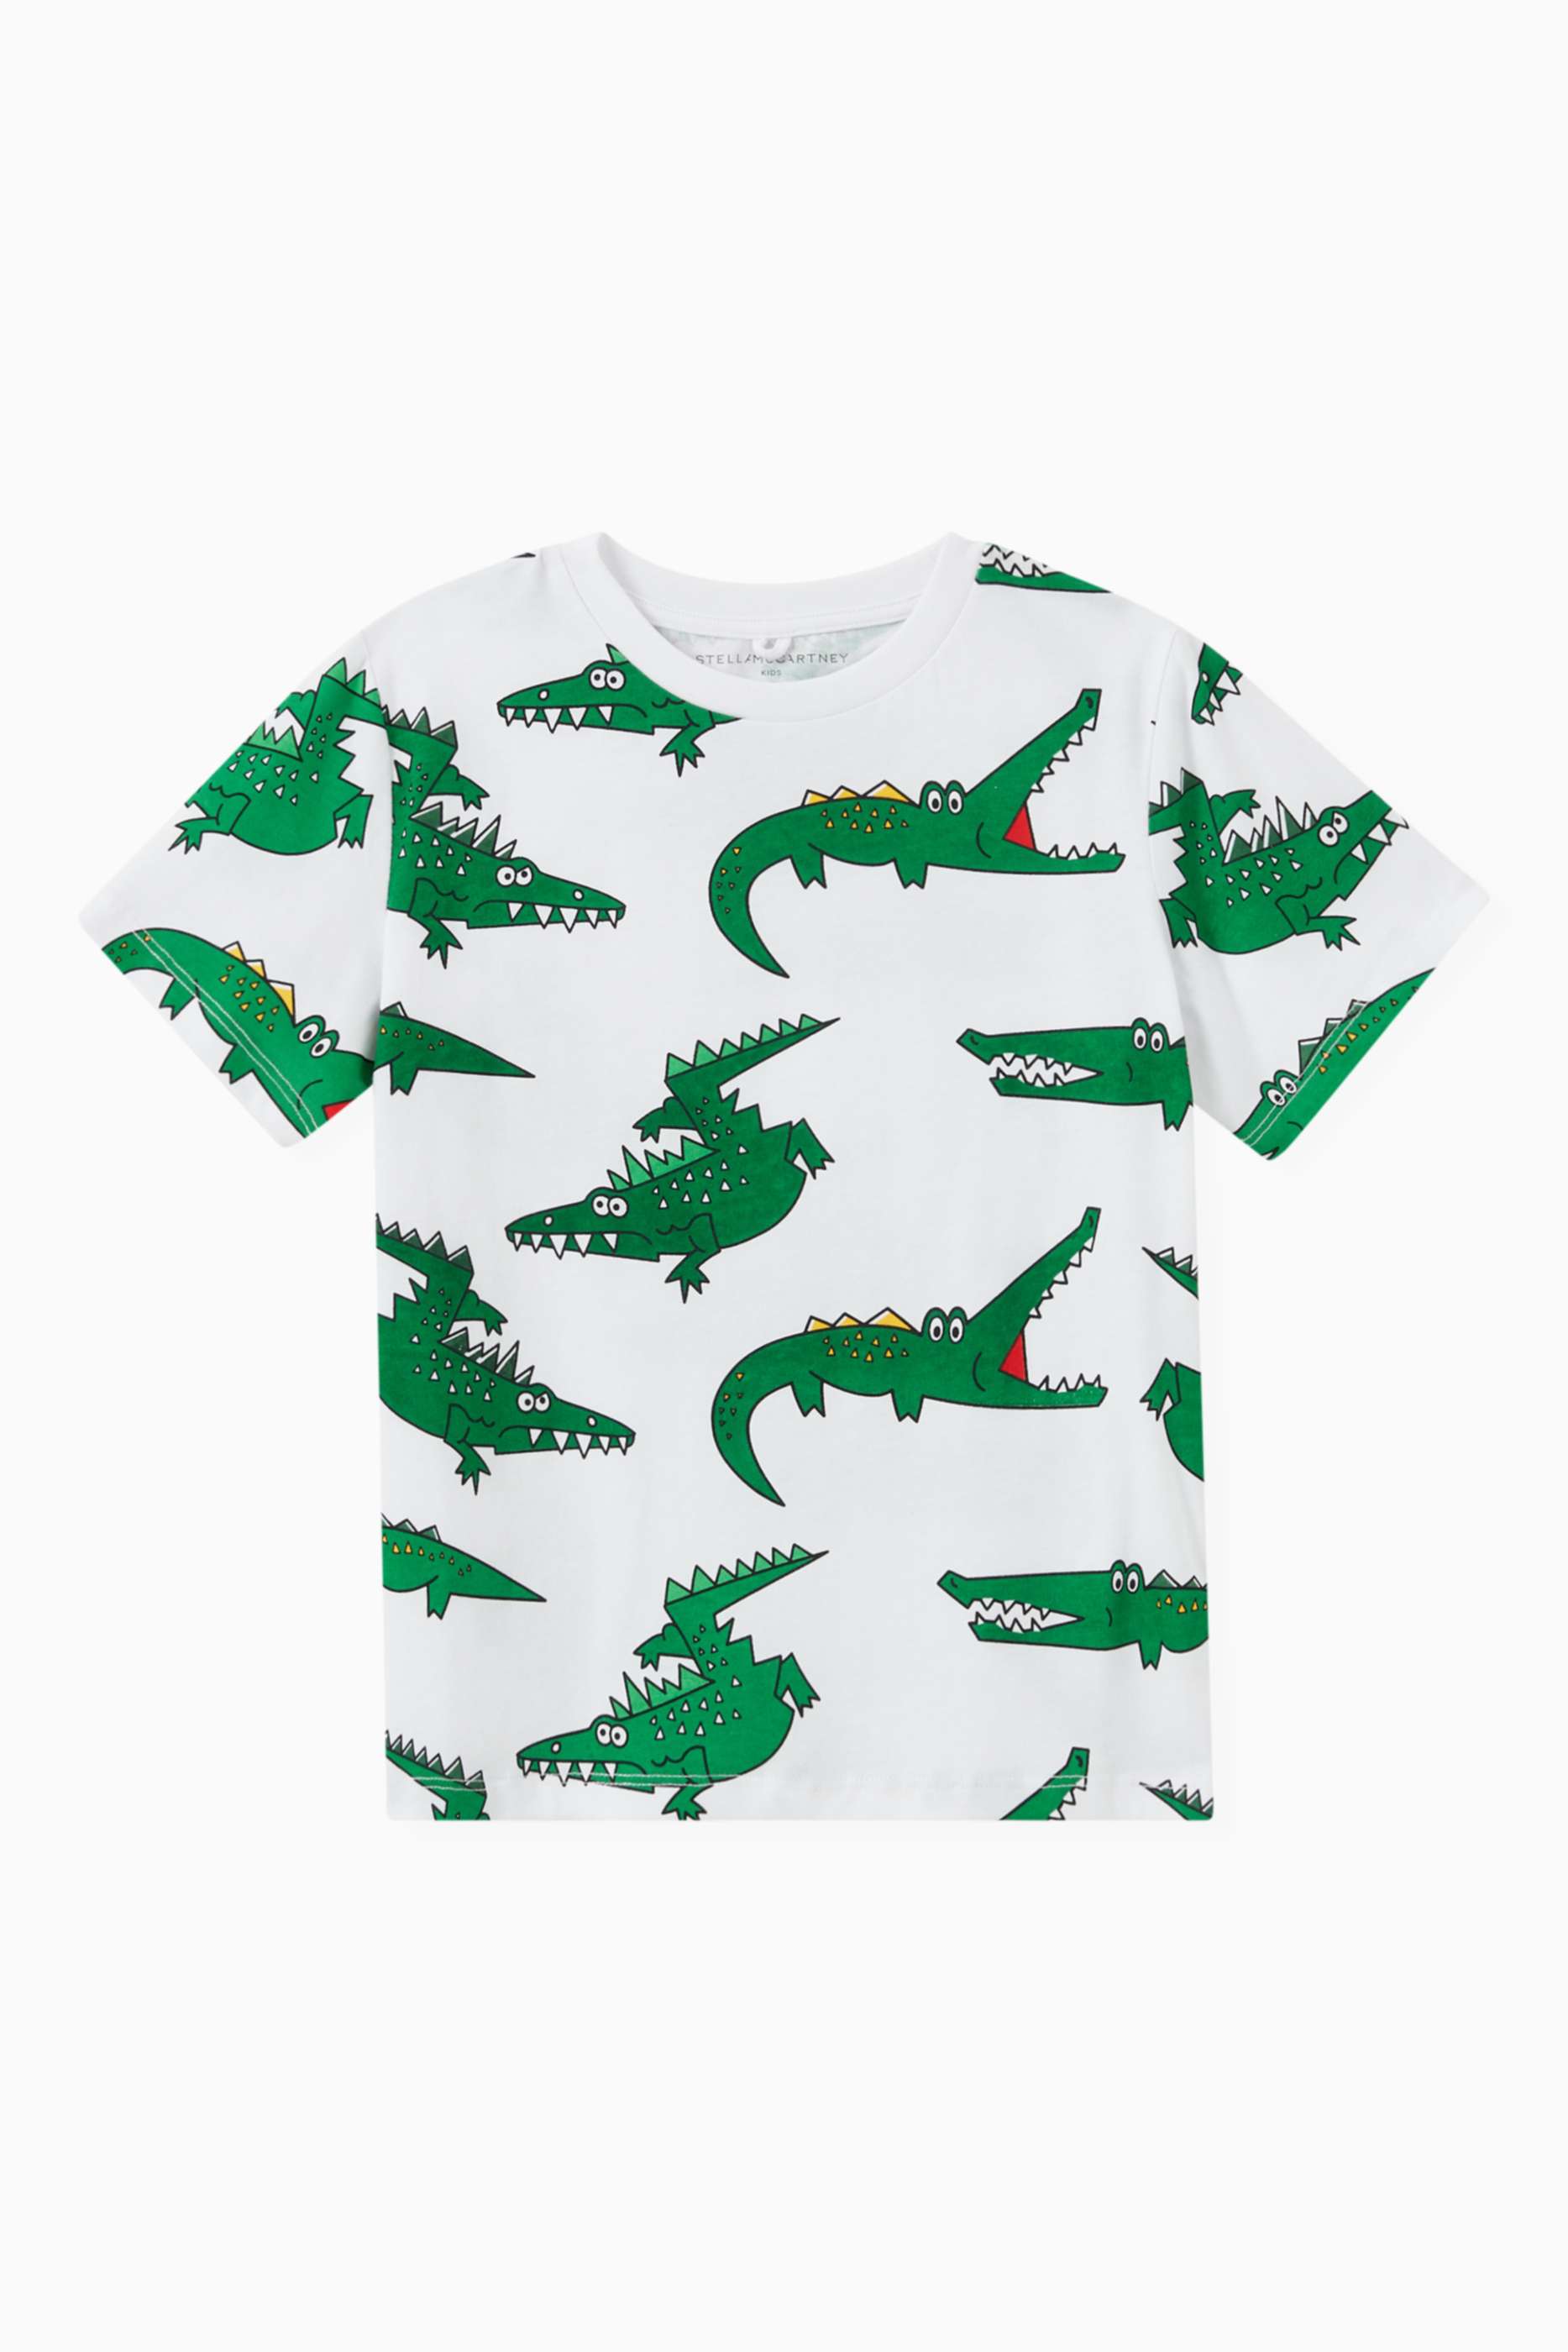 Shop Stella McCartney White Alligator Print T-Shirt in Jersey for 